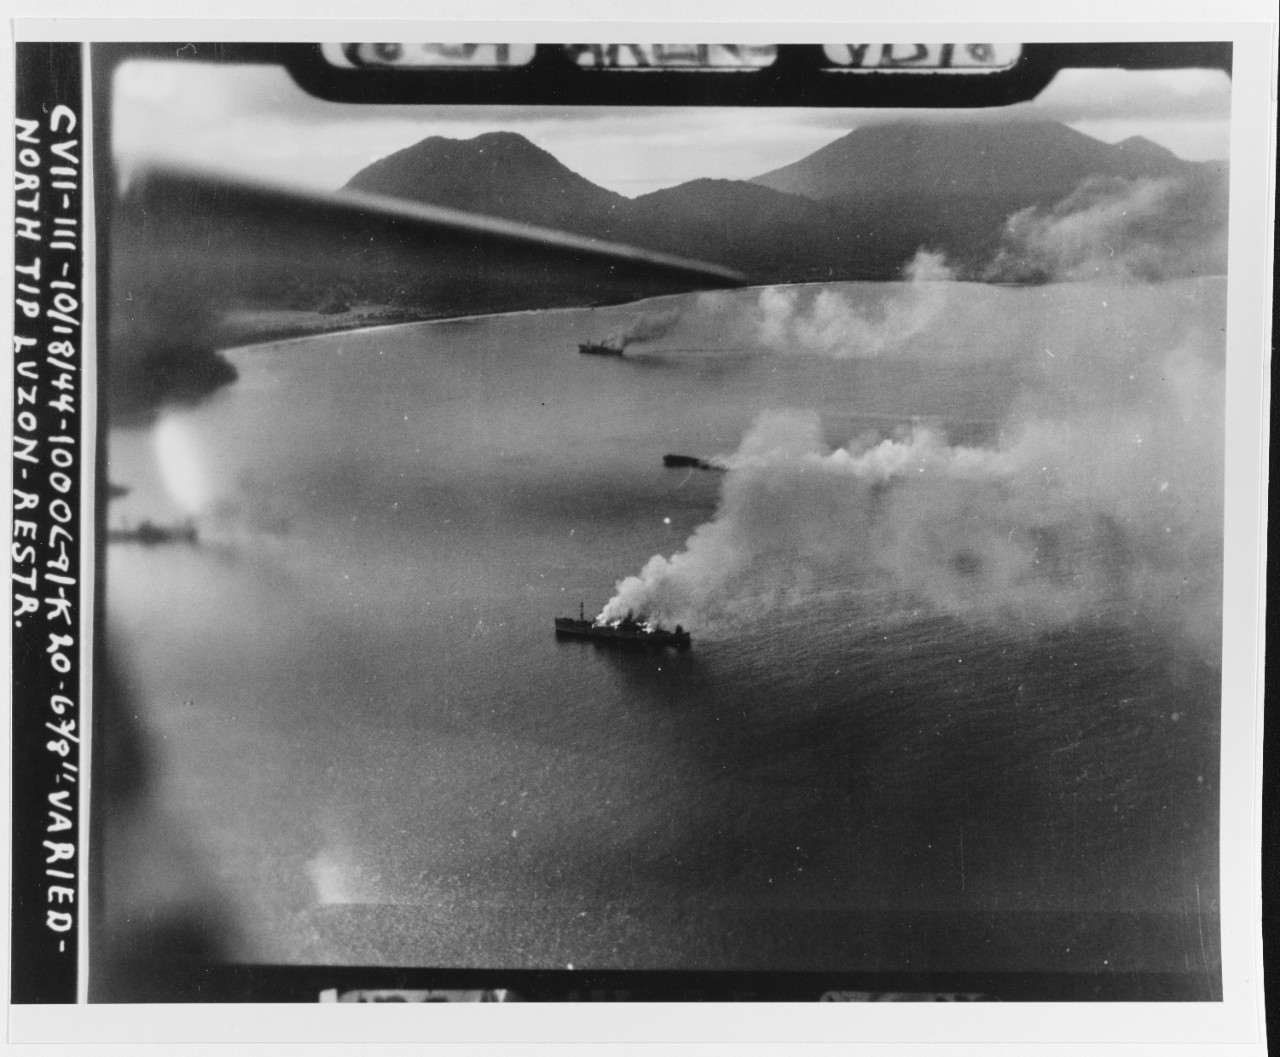 Carrier strikes off Luzon, 18 October 1944!